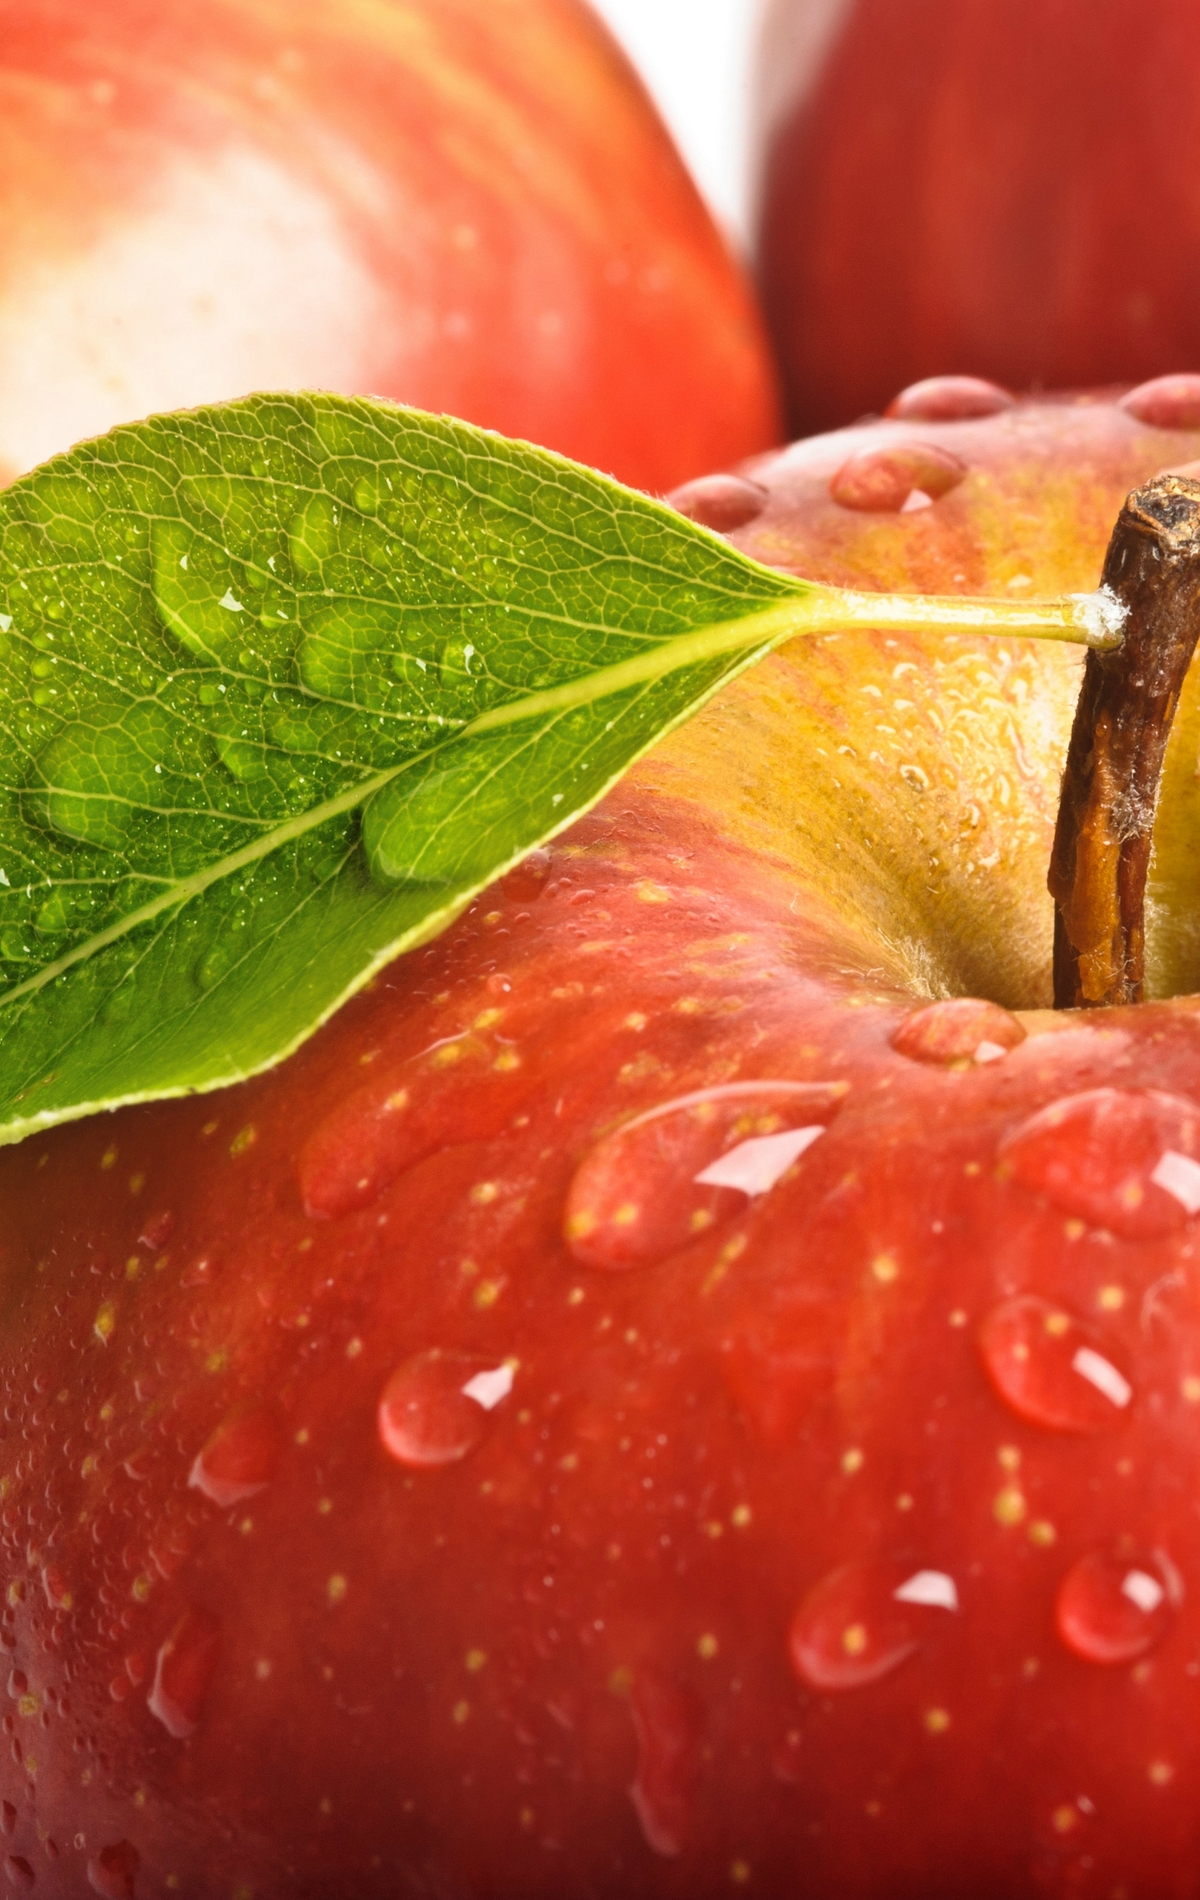 Image: Apples, red, fruit, leaf, water, drops